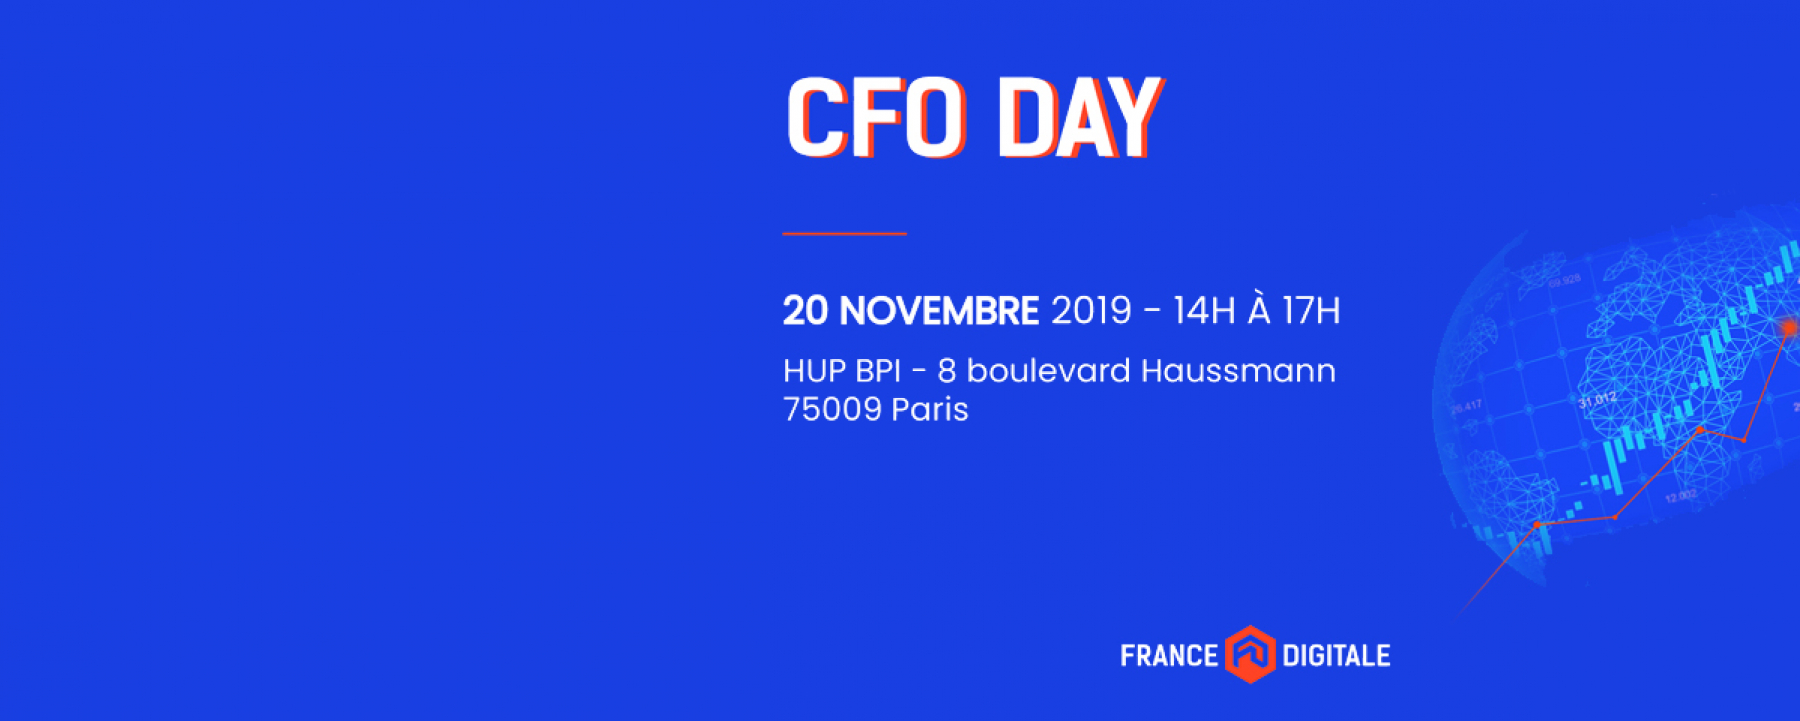 Bannière CFO Day 